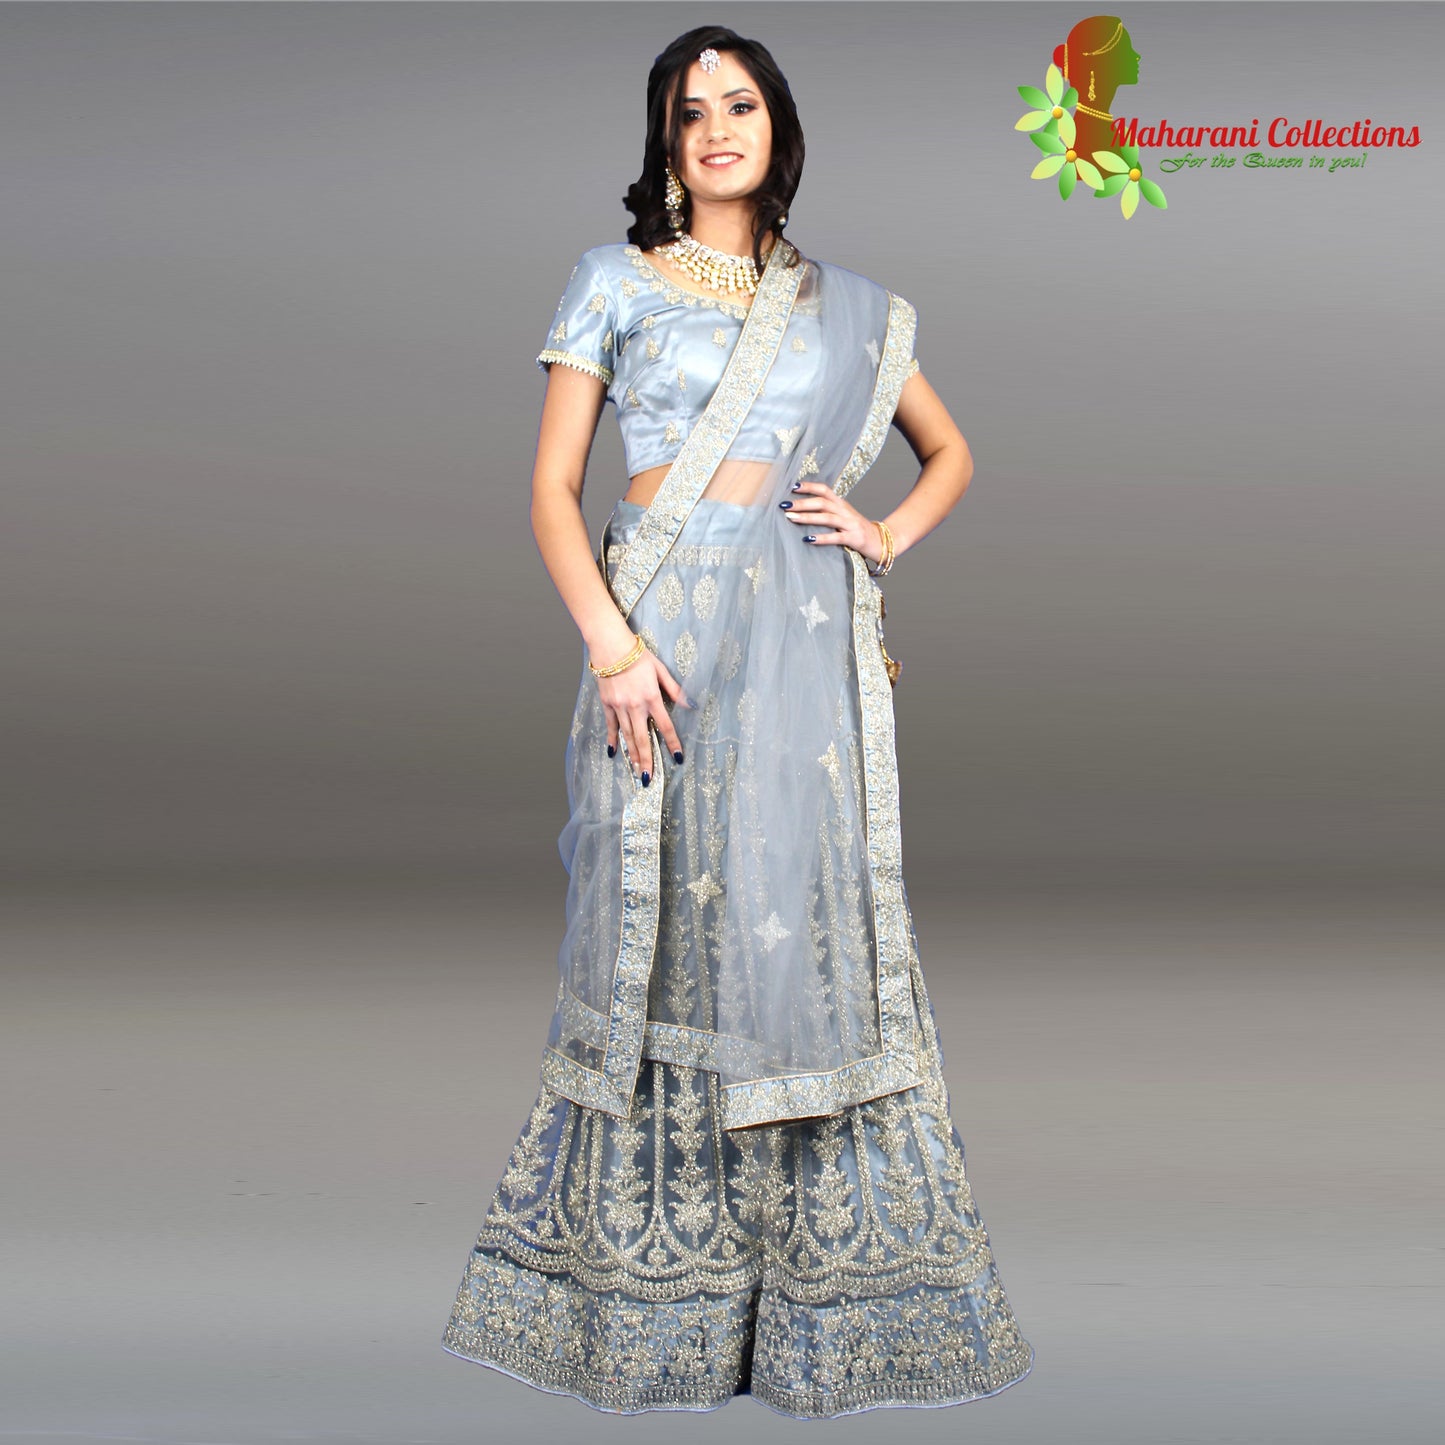 Maharani's Designer Net-Silk Lehenga - Light Blue with Zari and Sequins Embroidery